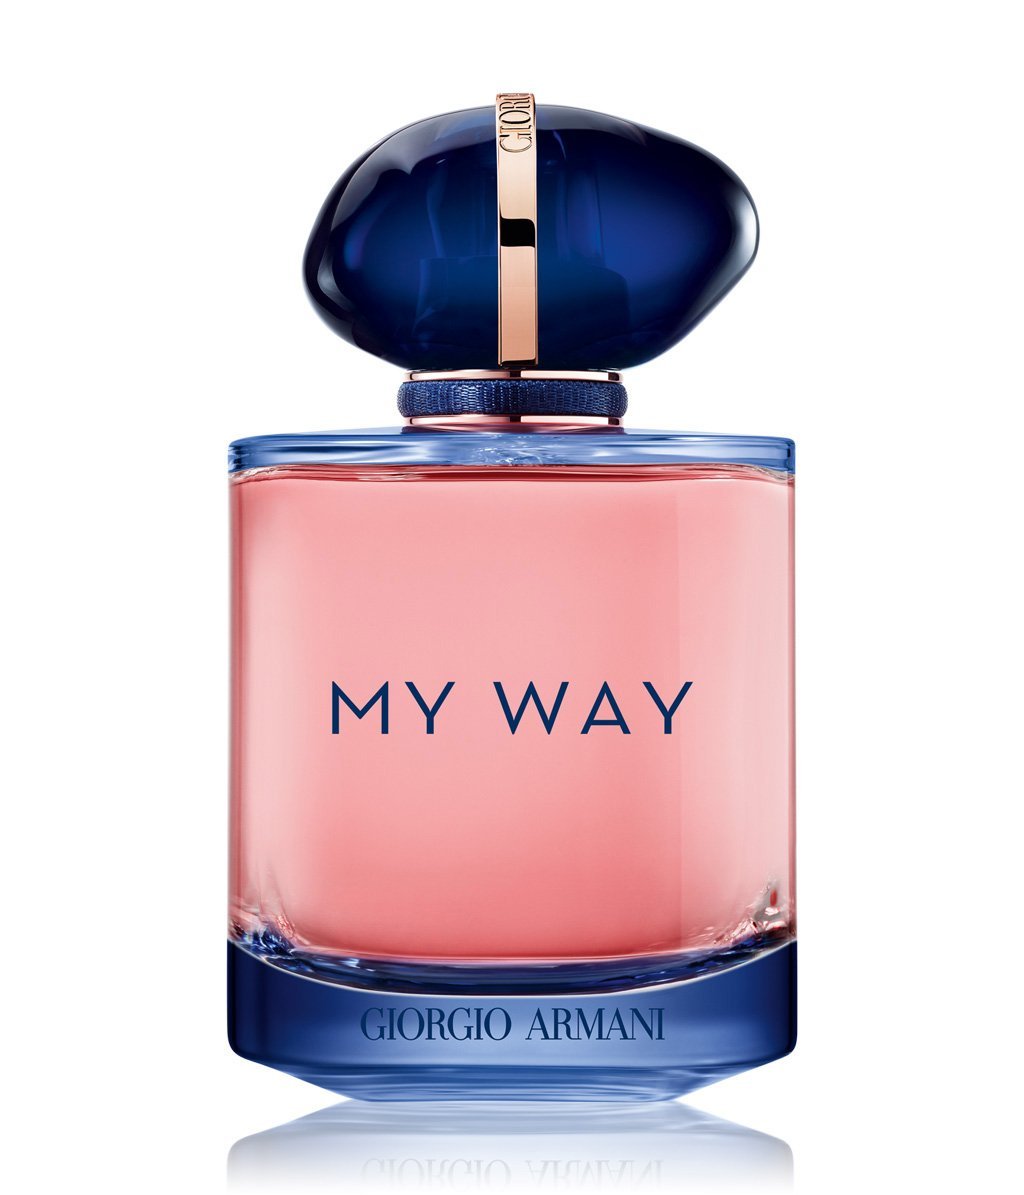 Giorgio Armani My Way Eau de Parfum Intense 90ml